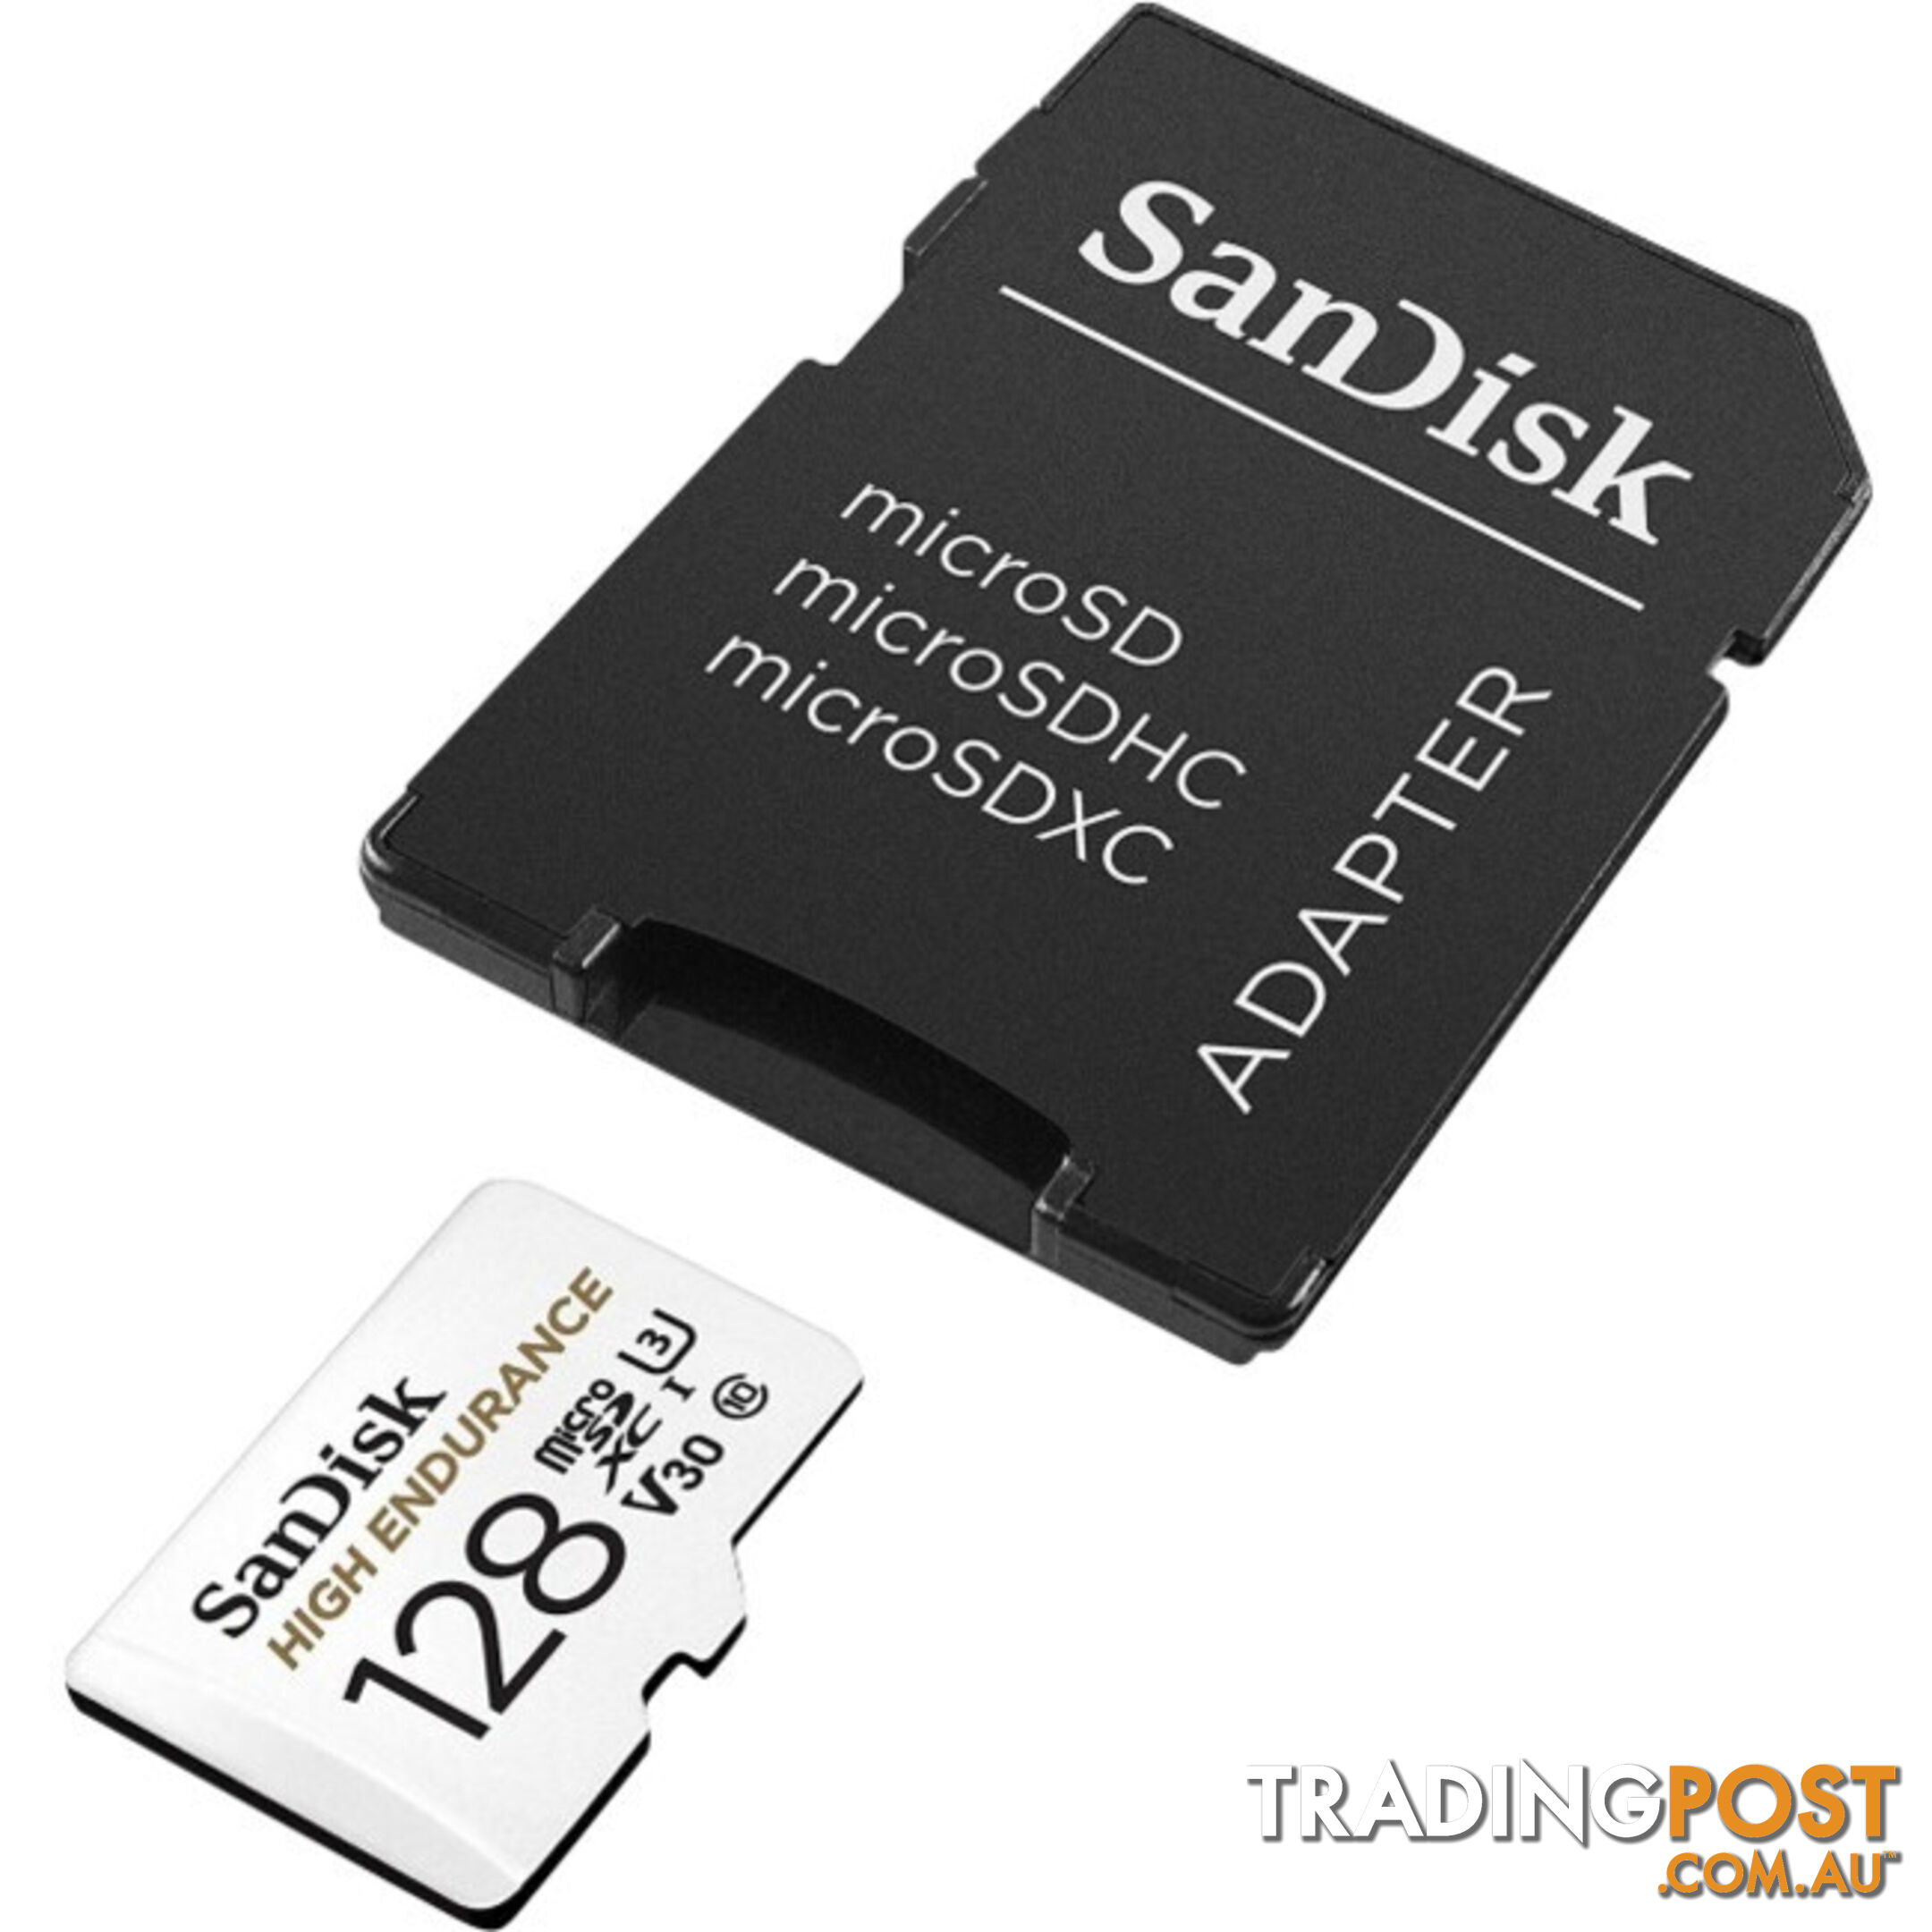 MSD128HE 128G MICRO SD CARD HIGH ENDURANCE 100MB SD ADAPTER